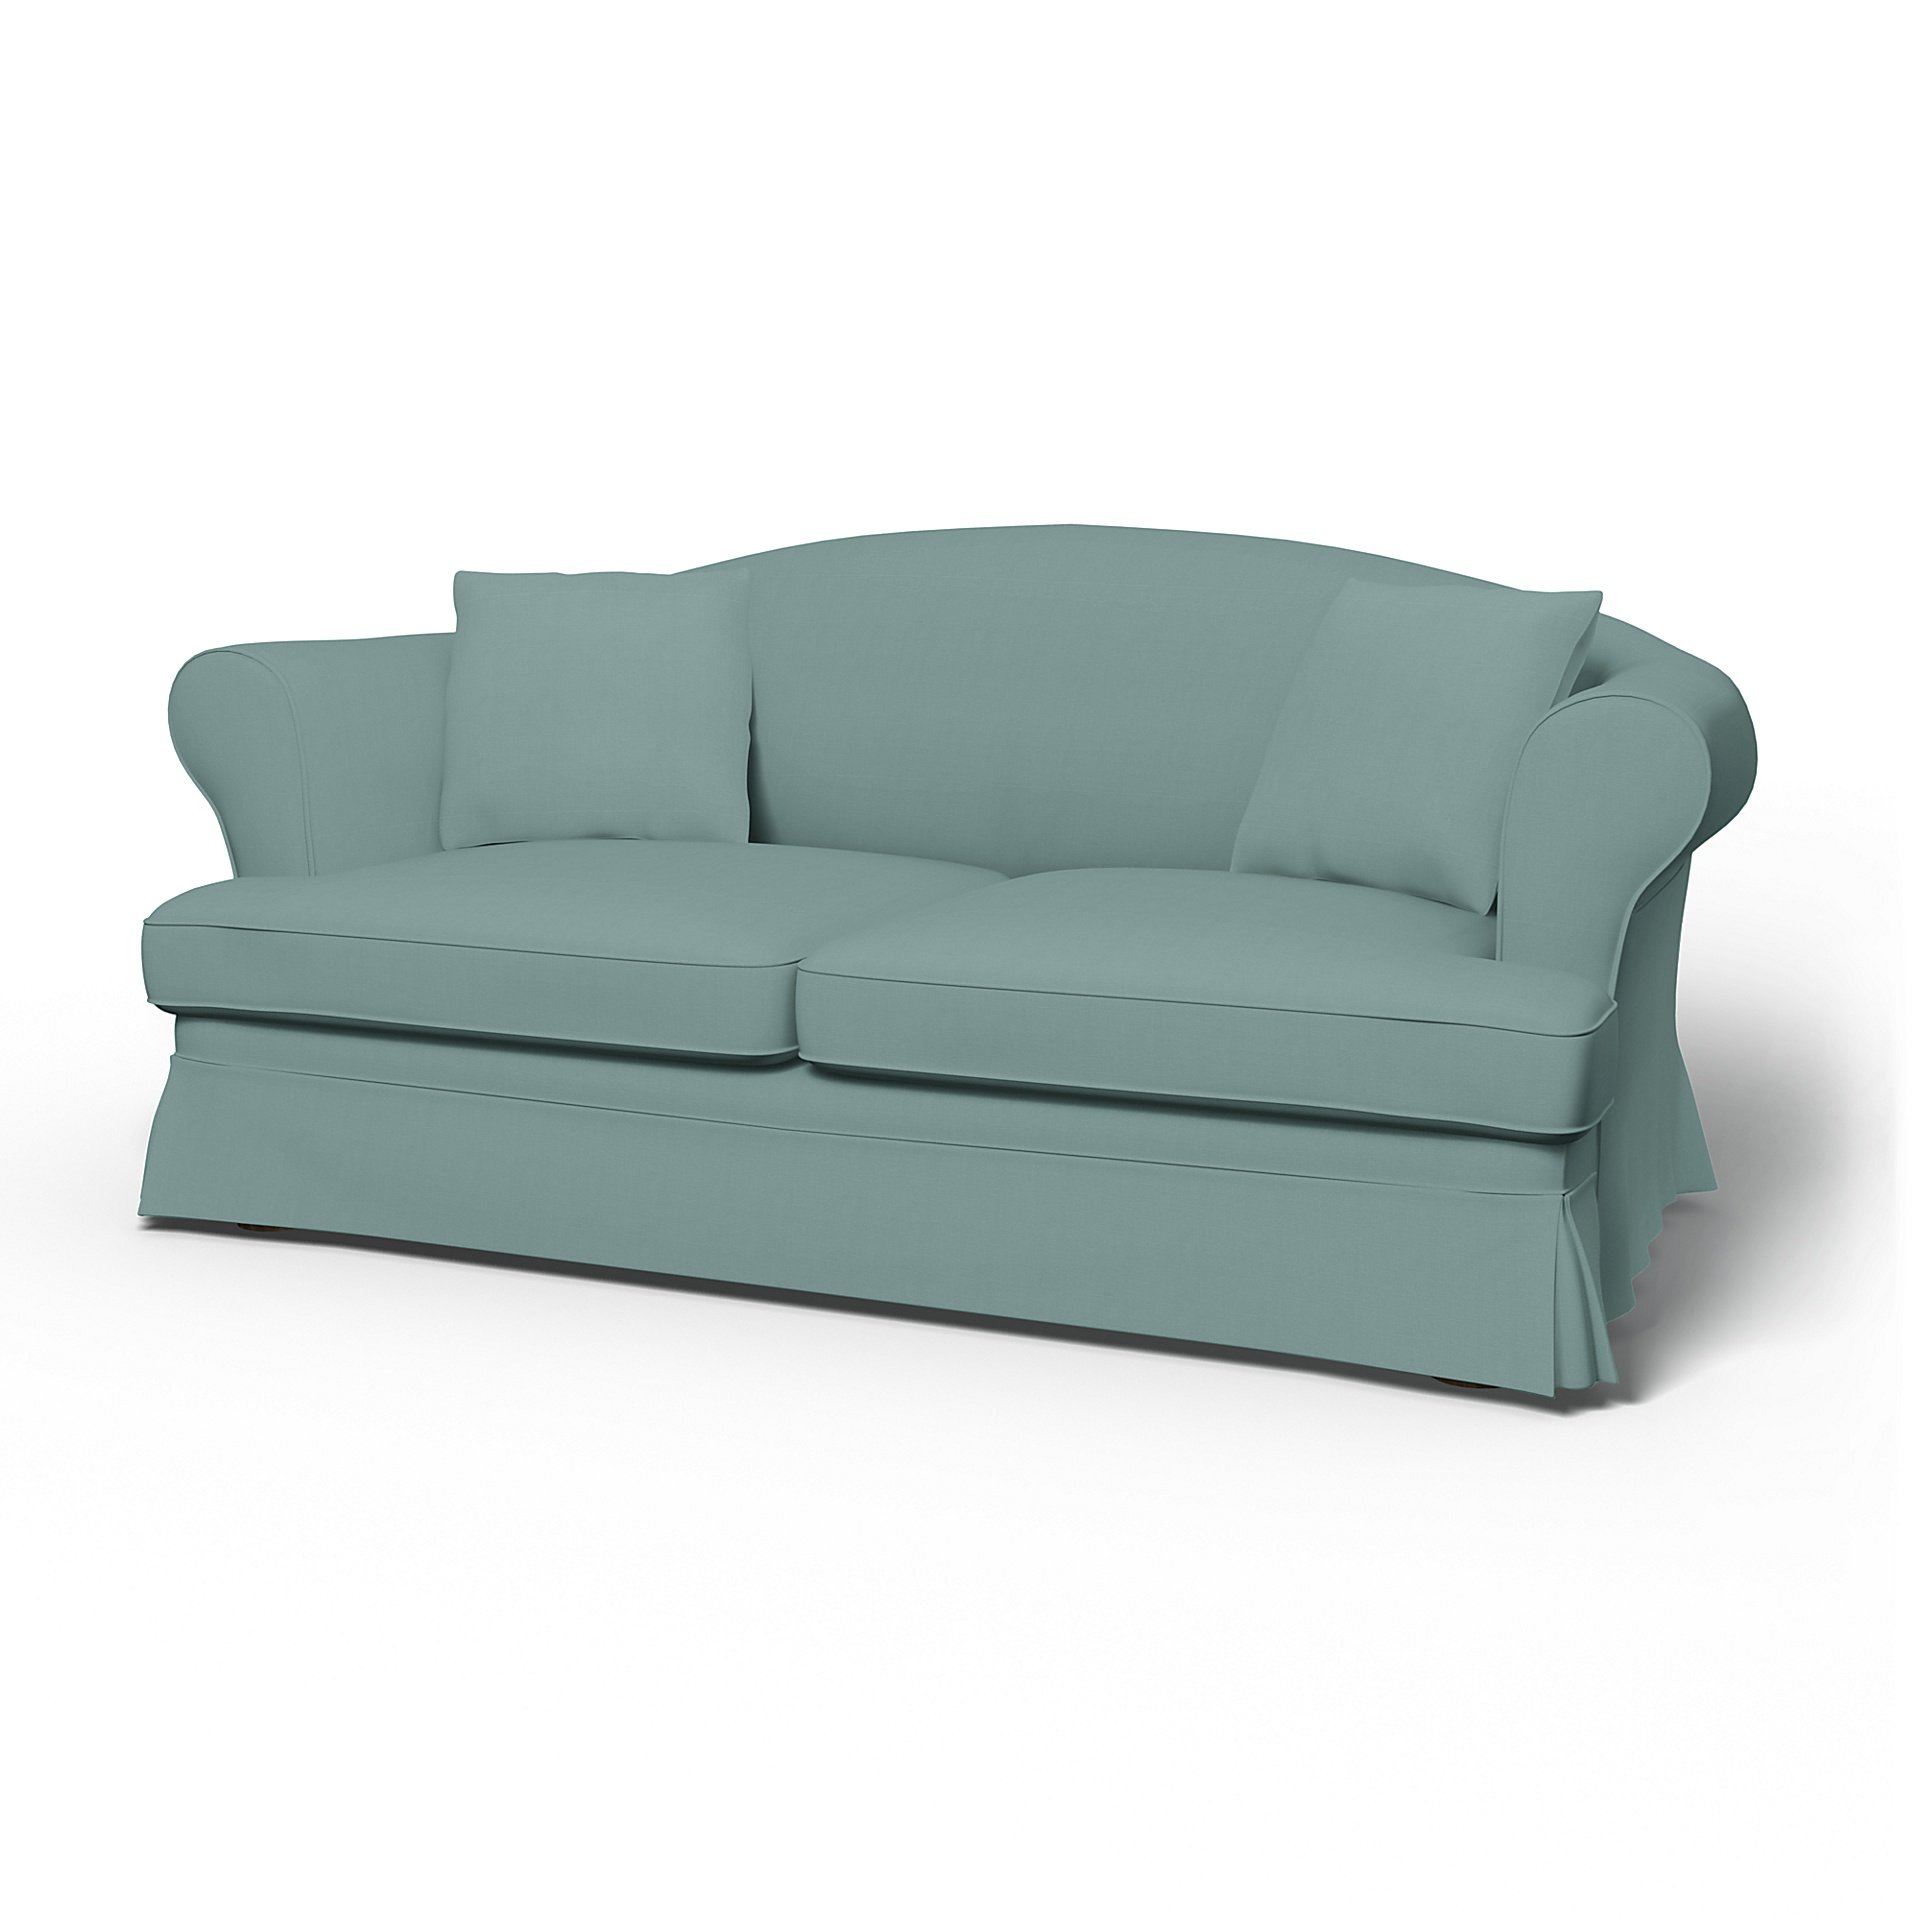 IKEA - Sundborn Sofa Bed Cover, Mineral Blue, Cotton - Bemz